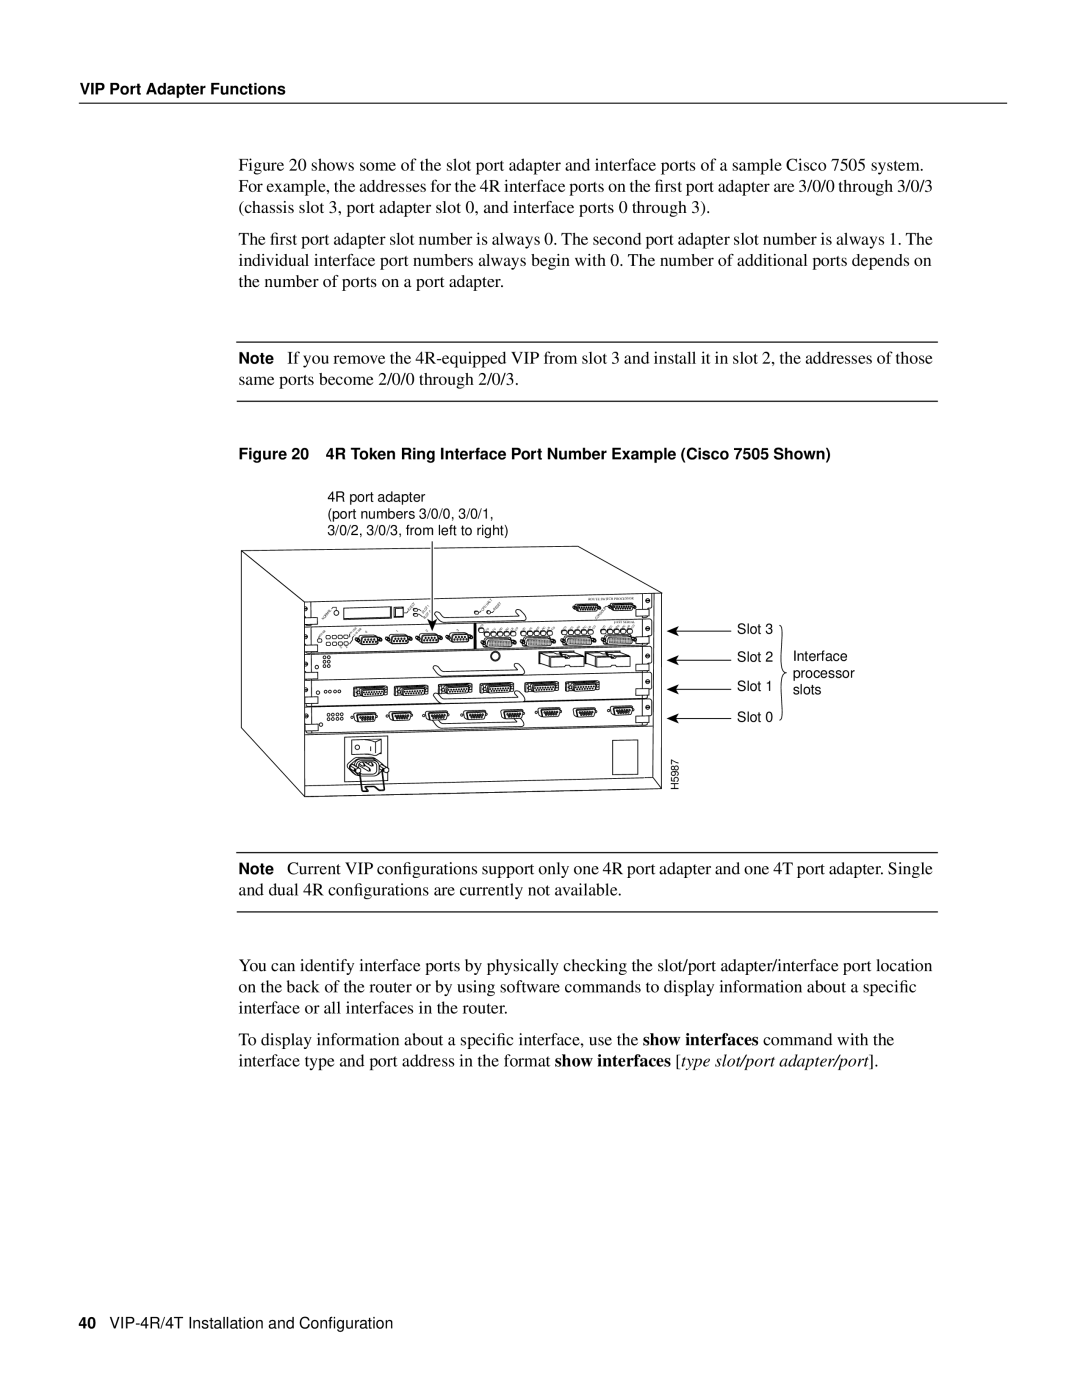 Cisco Systems manual VIP-4R/4T Installation and Conﬁguration, processor 